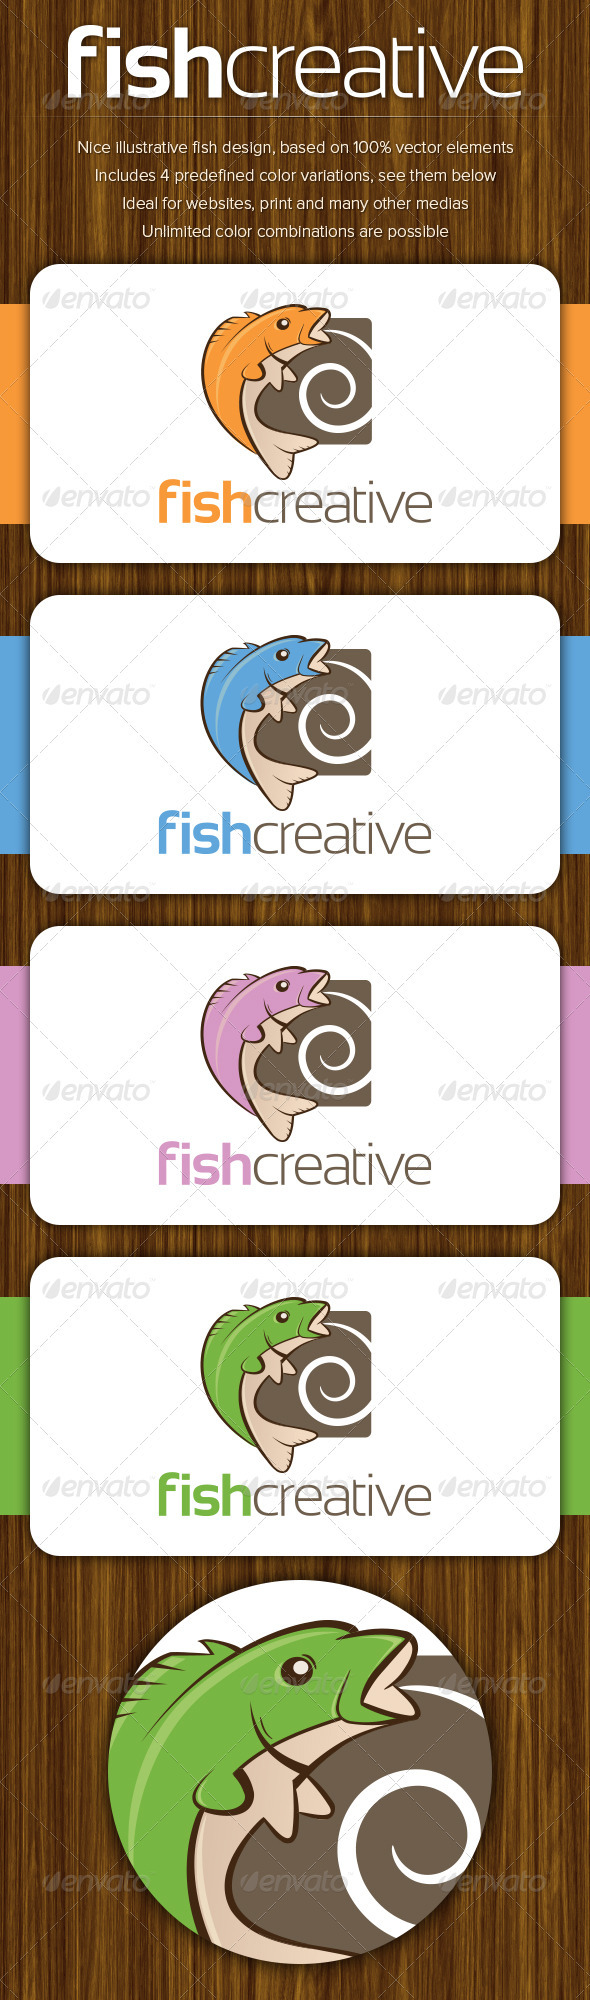 FishCreative - Illustrative Fish Logo Template